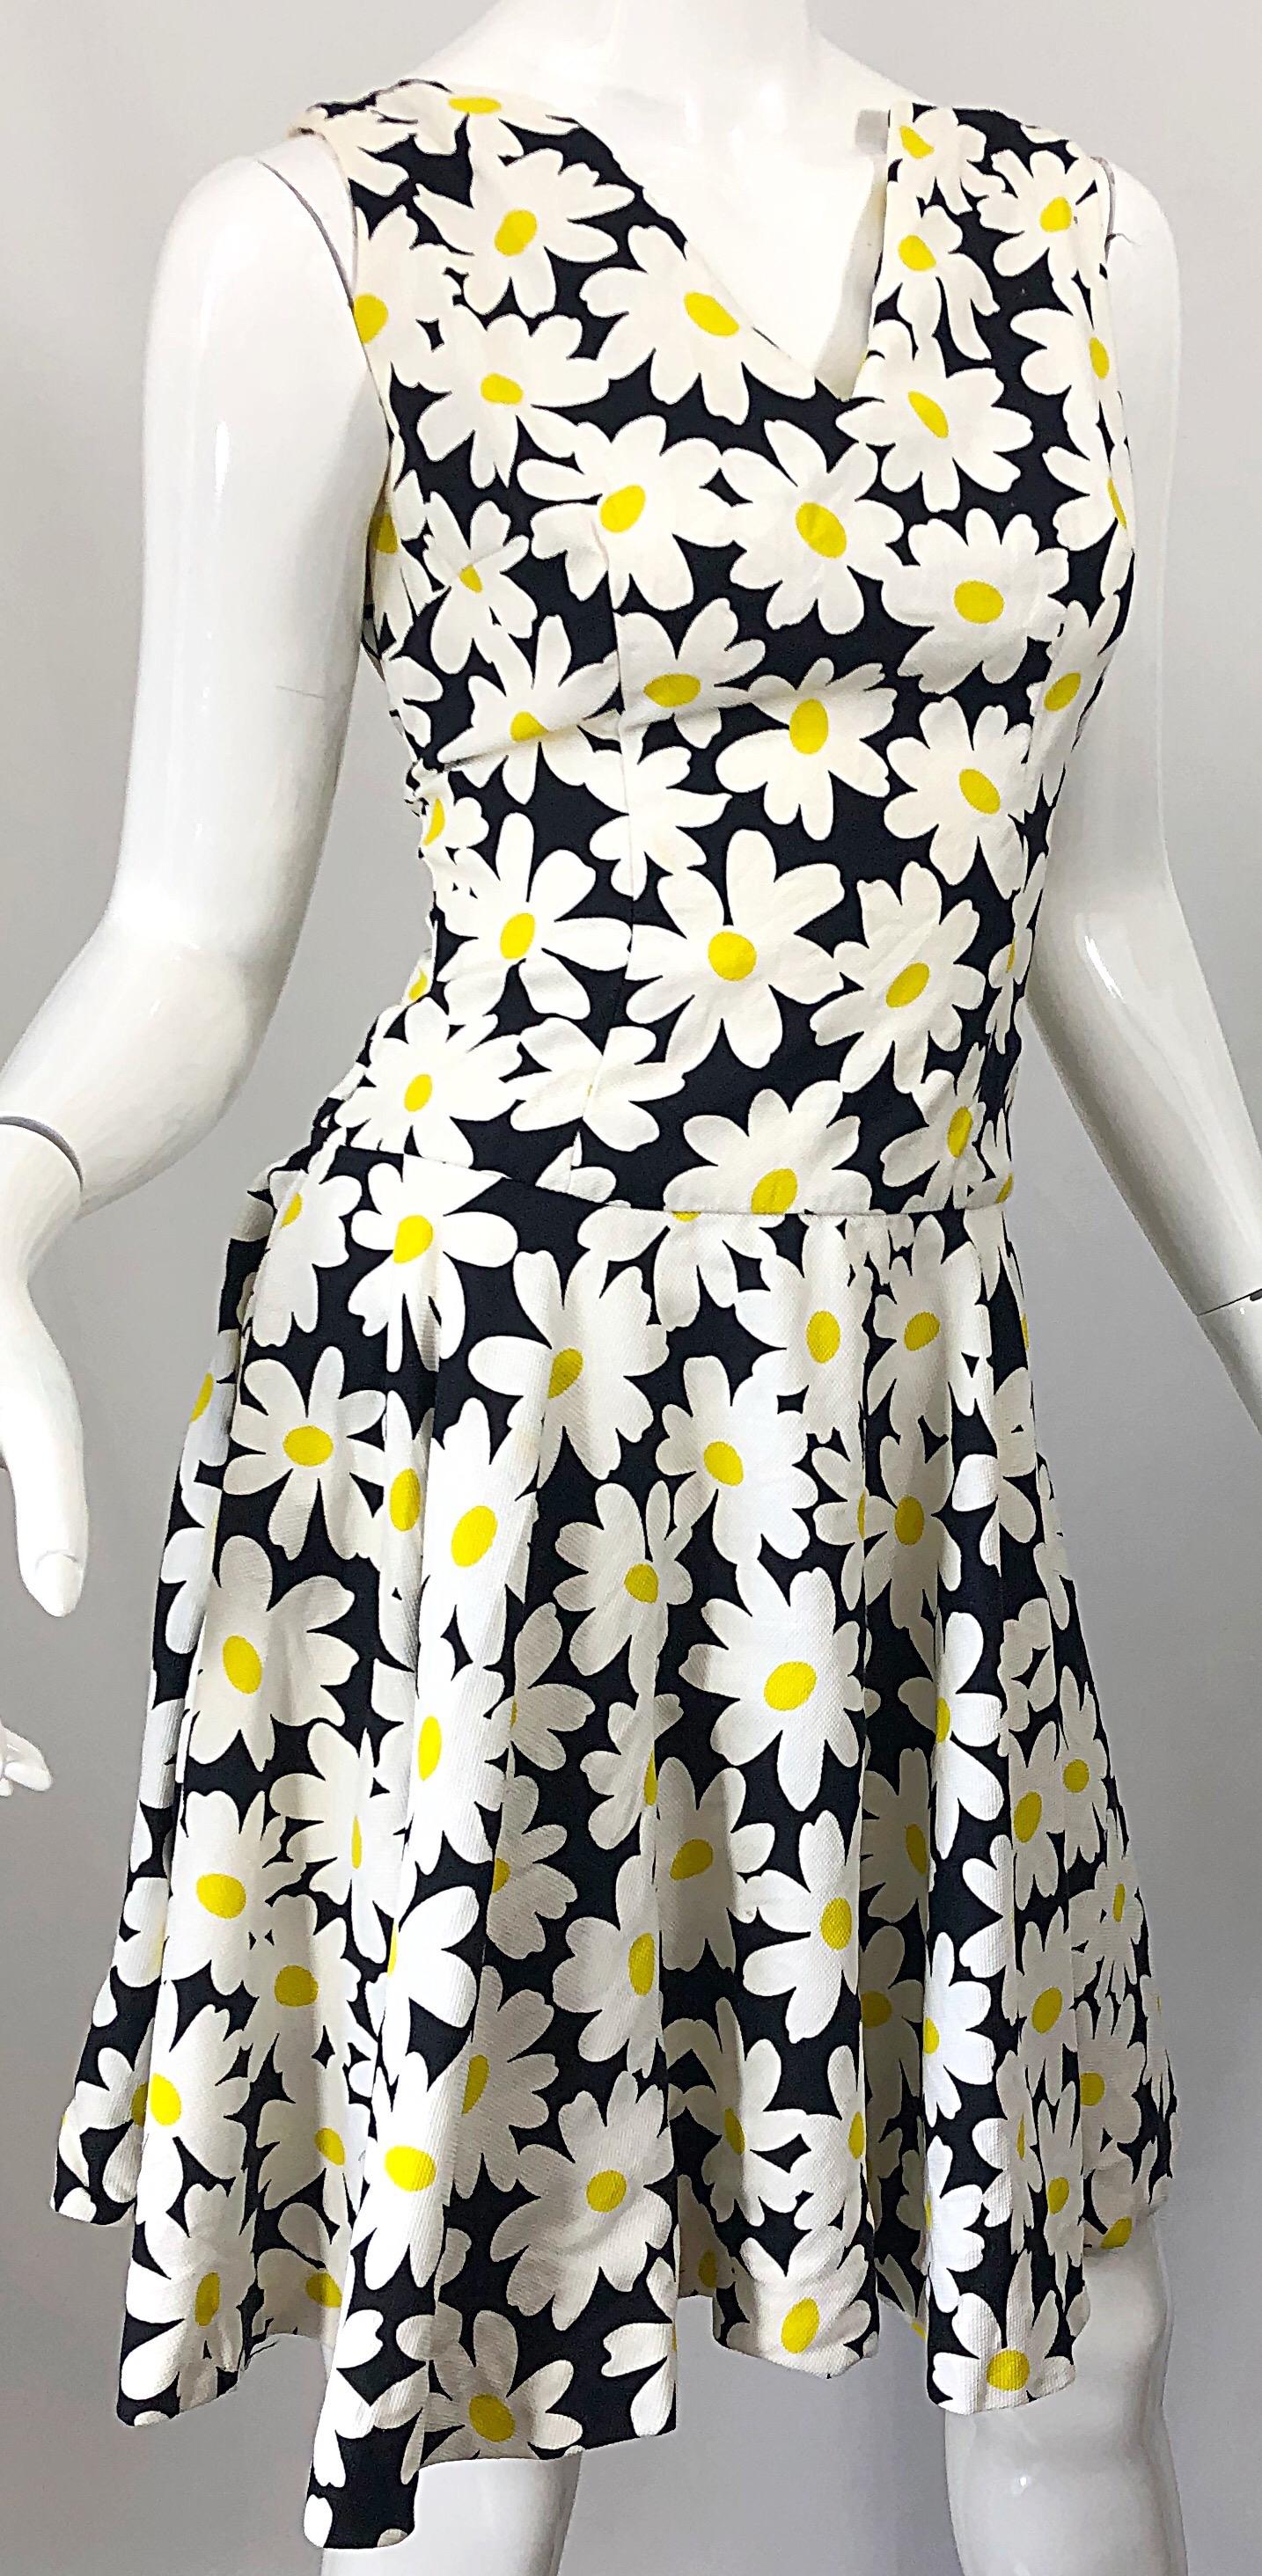 I Magnin 1960s Black and White Daisy Print Pique Cotton Vintage 60s A Line Dress For Sale 1